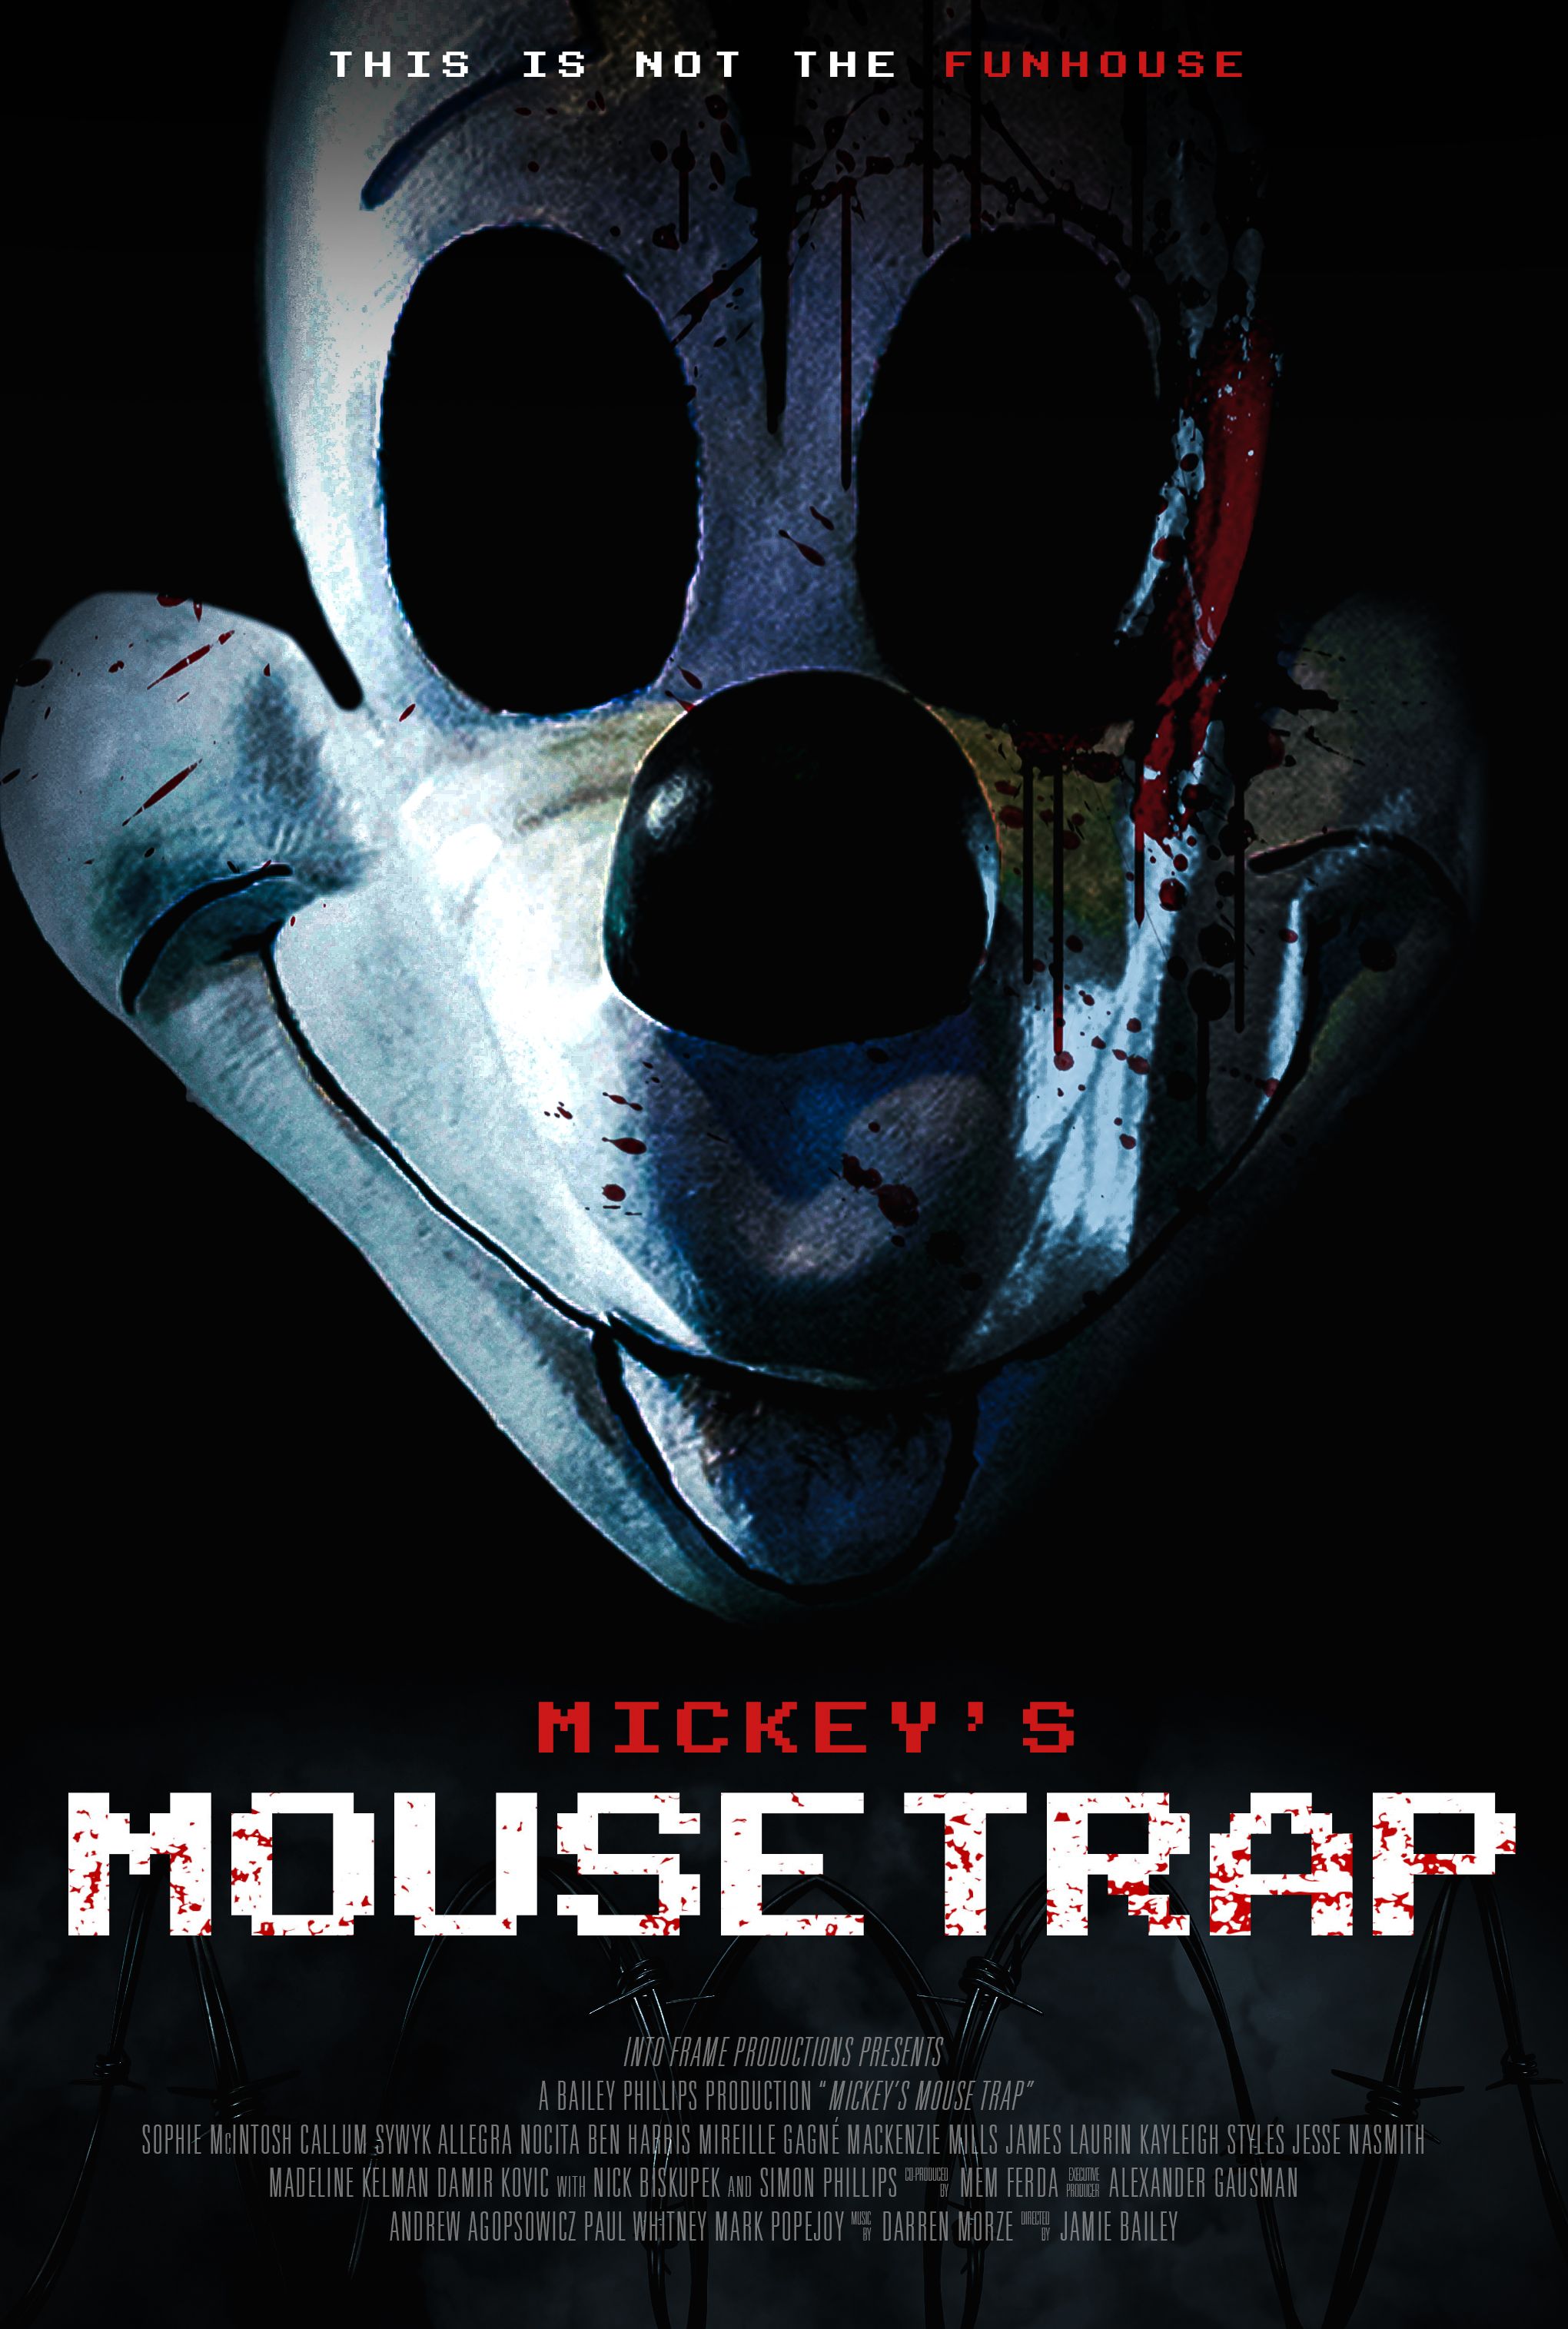 Poster Film Perangkap Tikus Mickey Menampilkan Pembunuh yang Mengenakan Topeng Mickey Mouse Berdarah